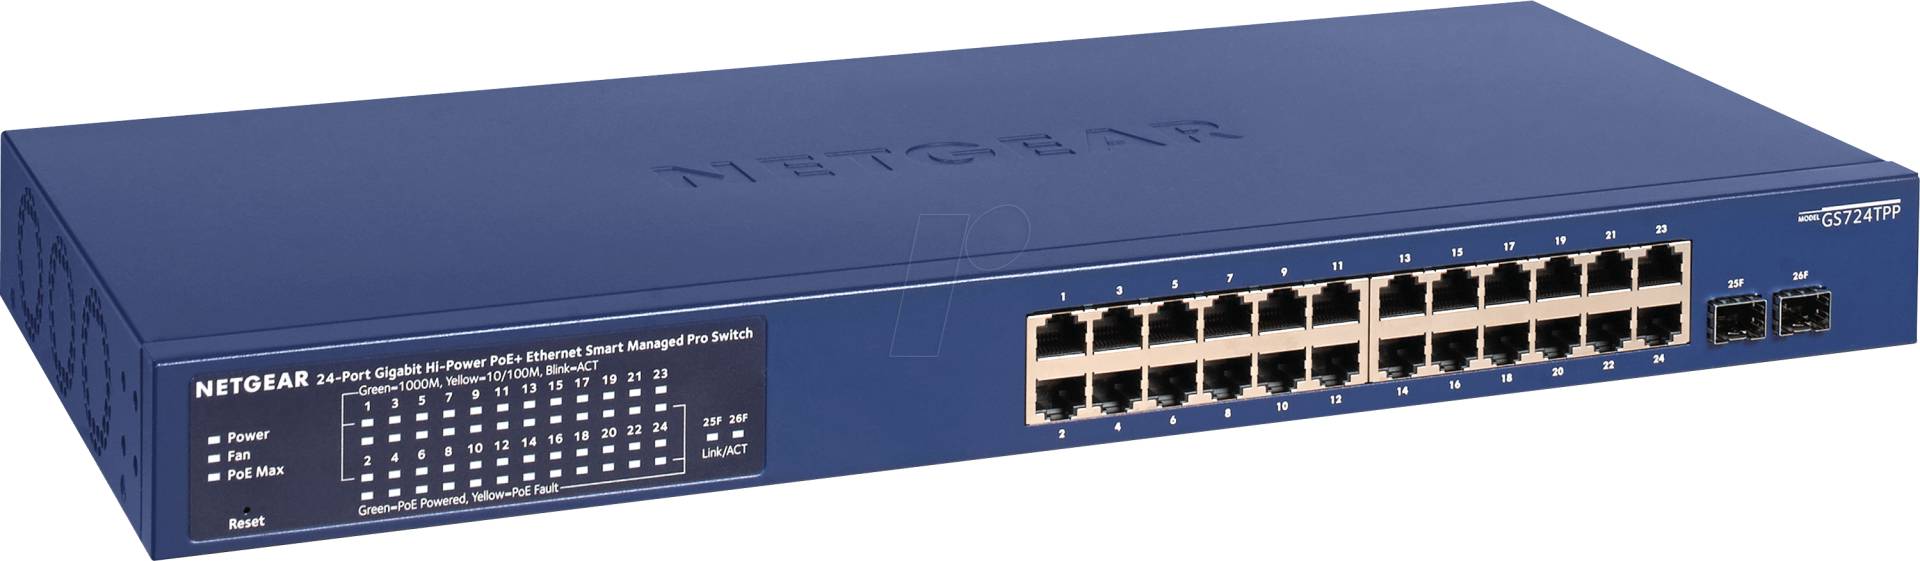 NETGEAR GS724TPP - Switch, 24-Port, Gigabit Ethernet, PoE+ von Netgear